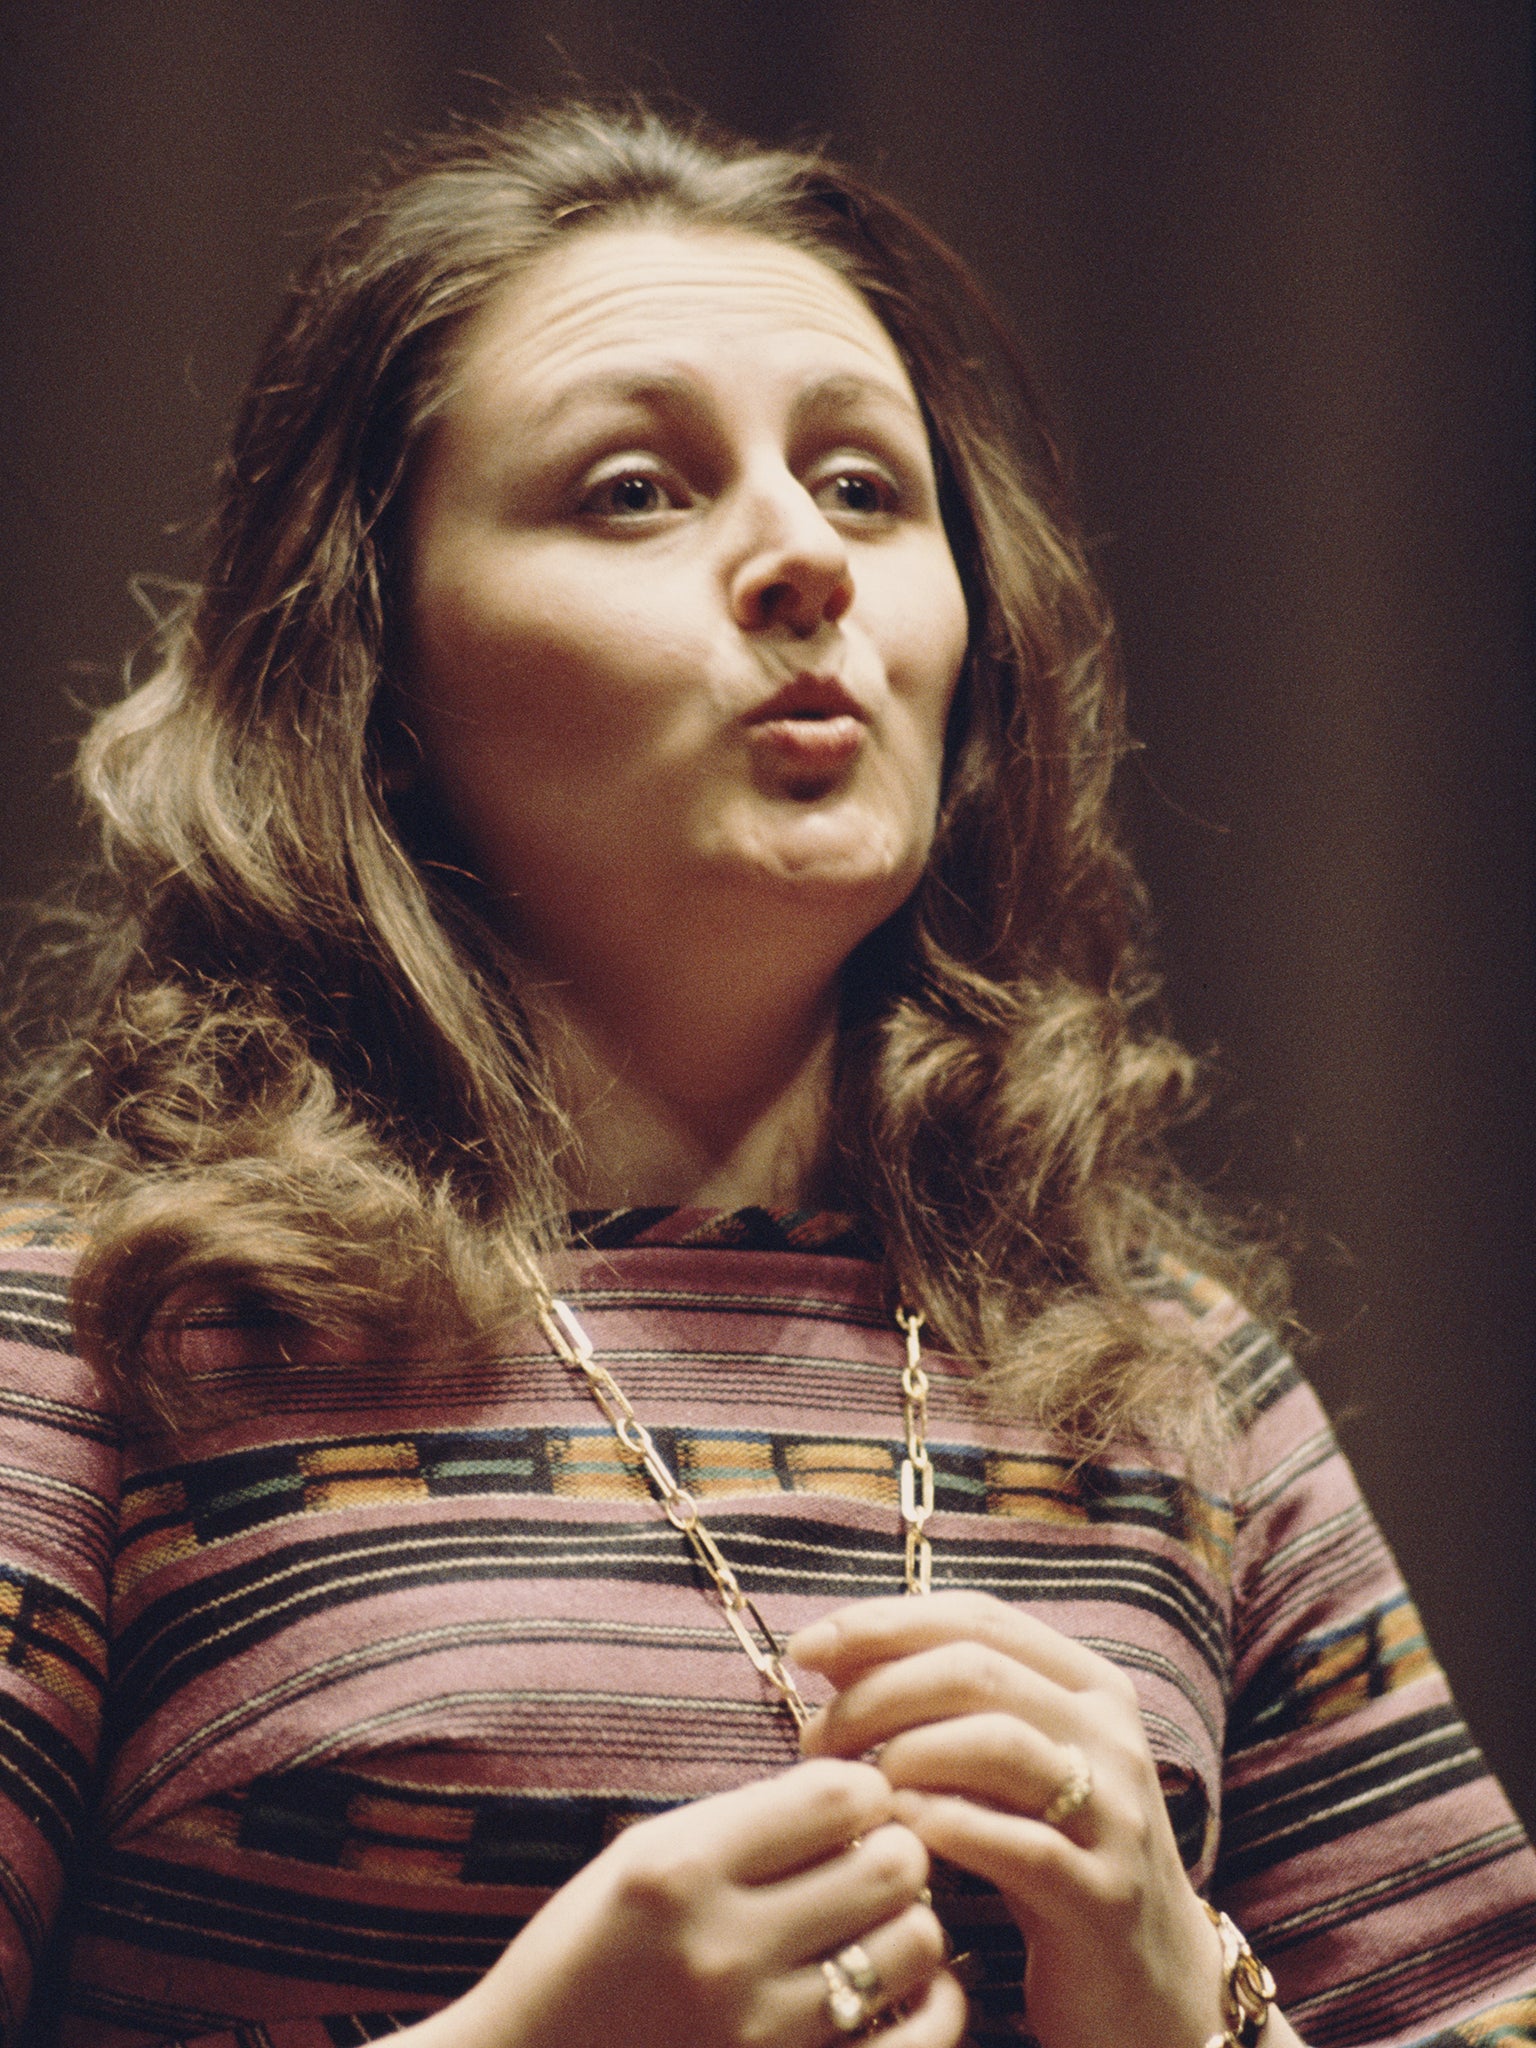 Edita Gruberova at around 1970